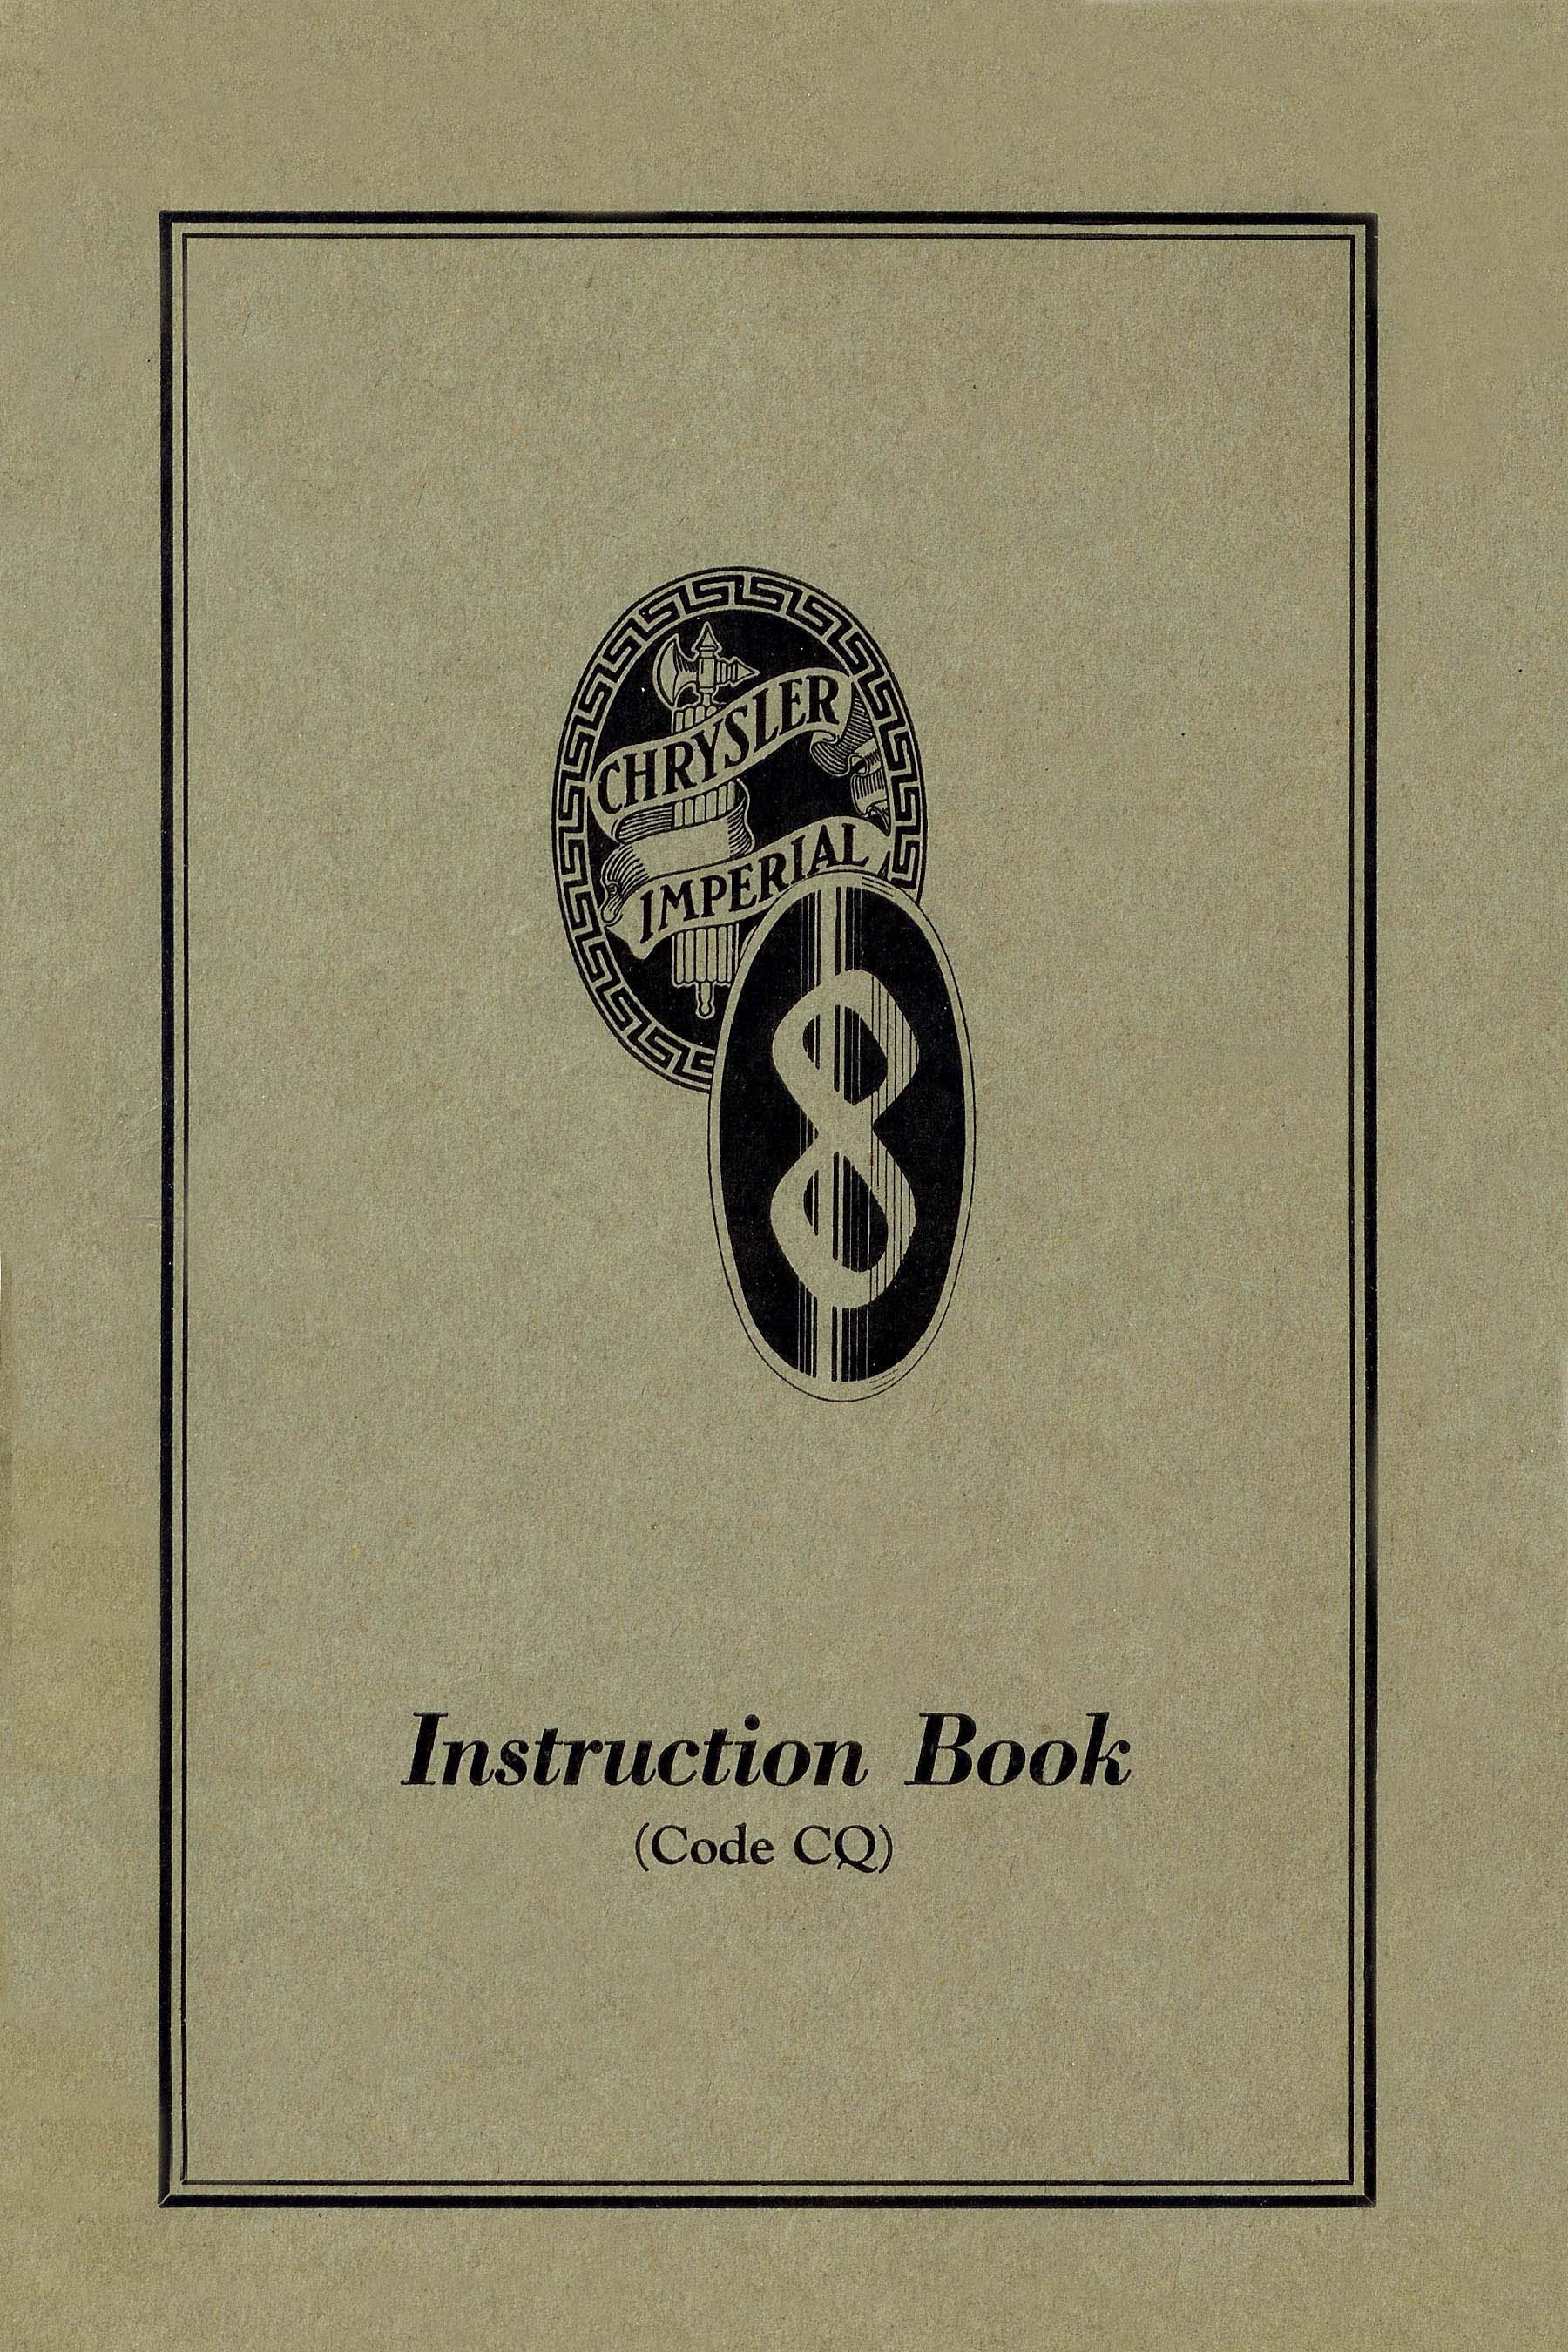 1933 Chrysler Imperial Instruction Book